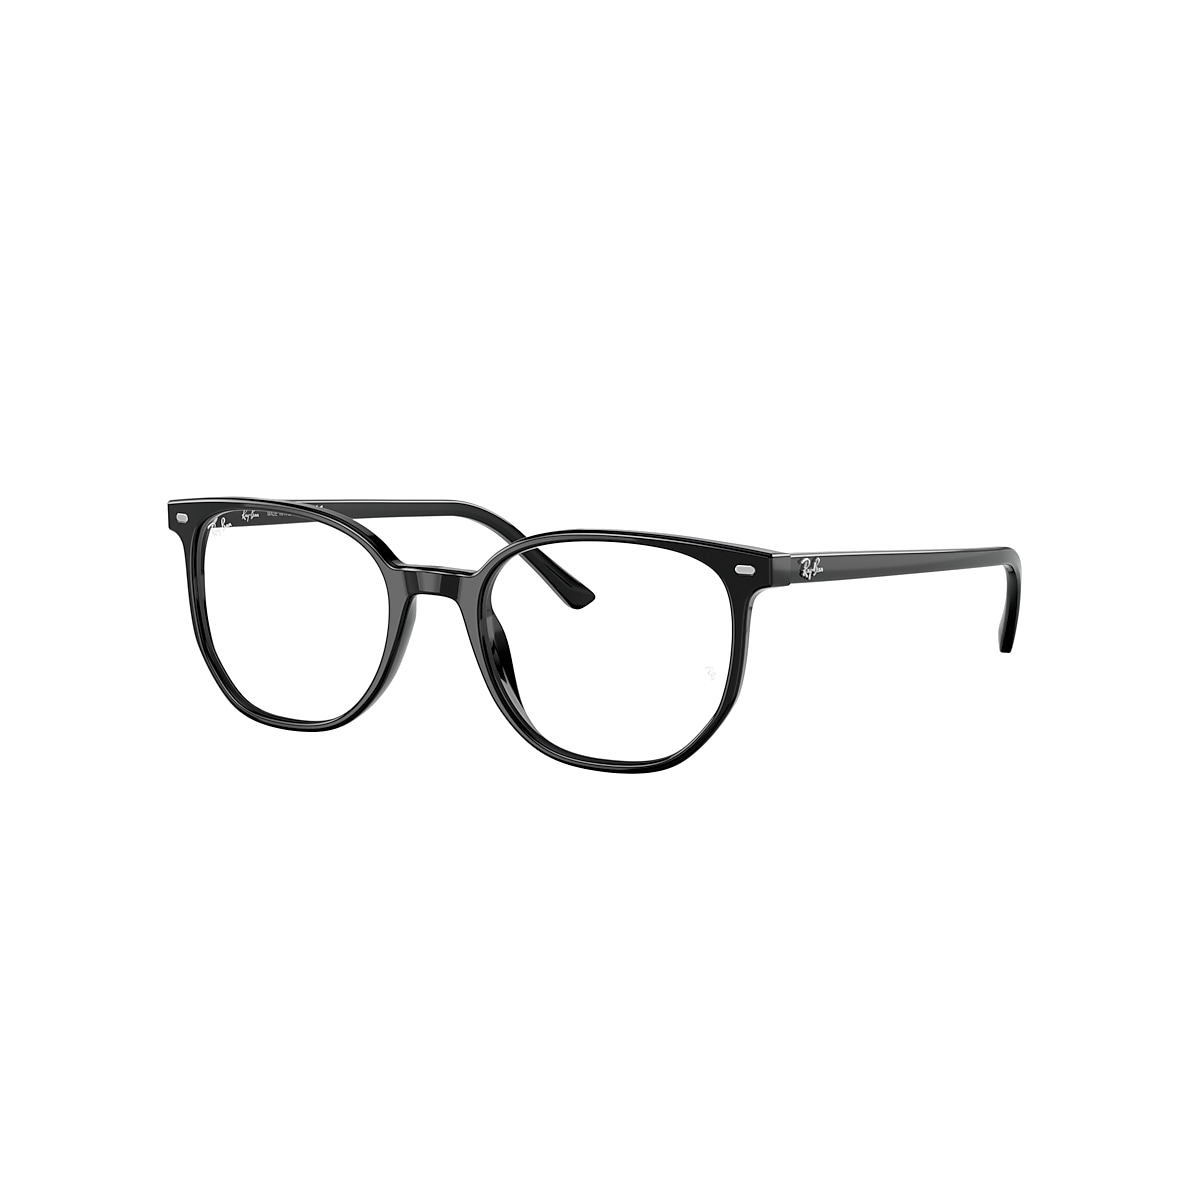 ELLIOT OPTICS Eyeglasses with Black Frame - RB5397 | Ray-Ban® US